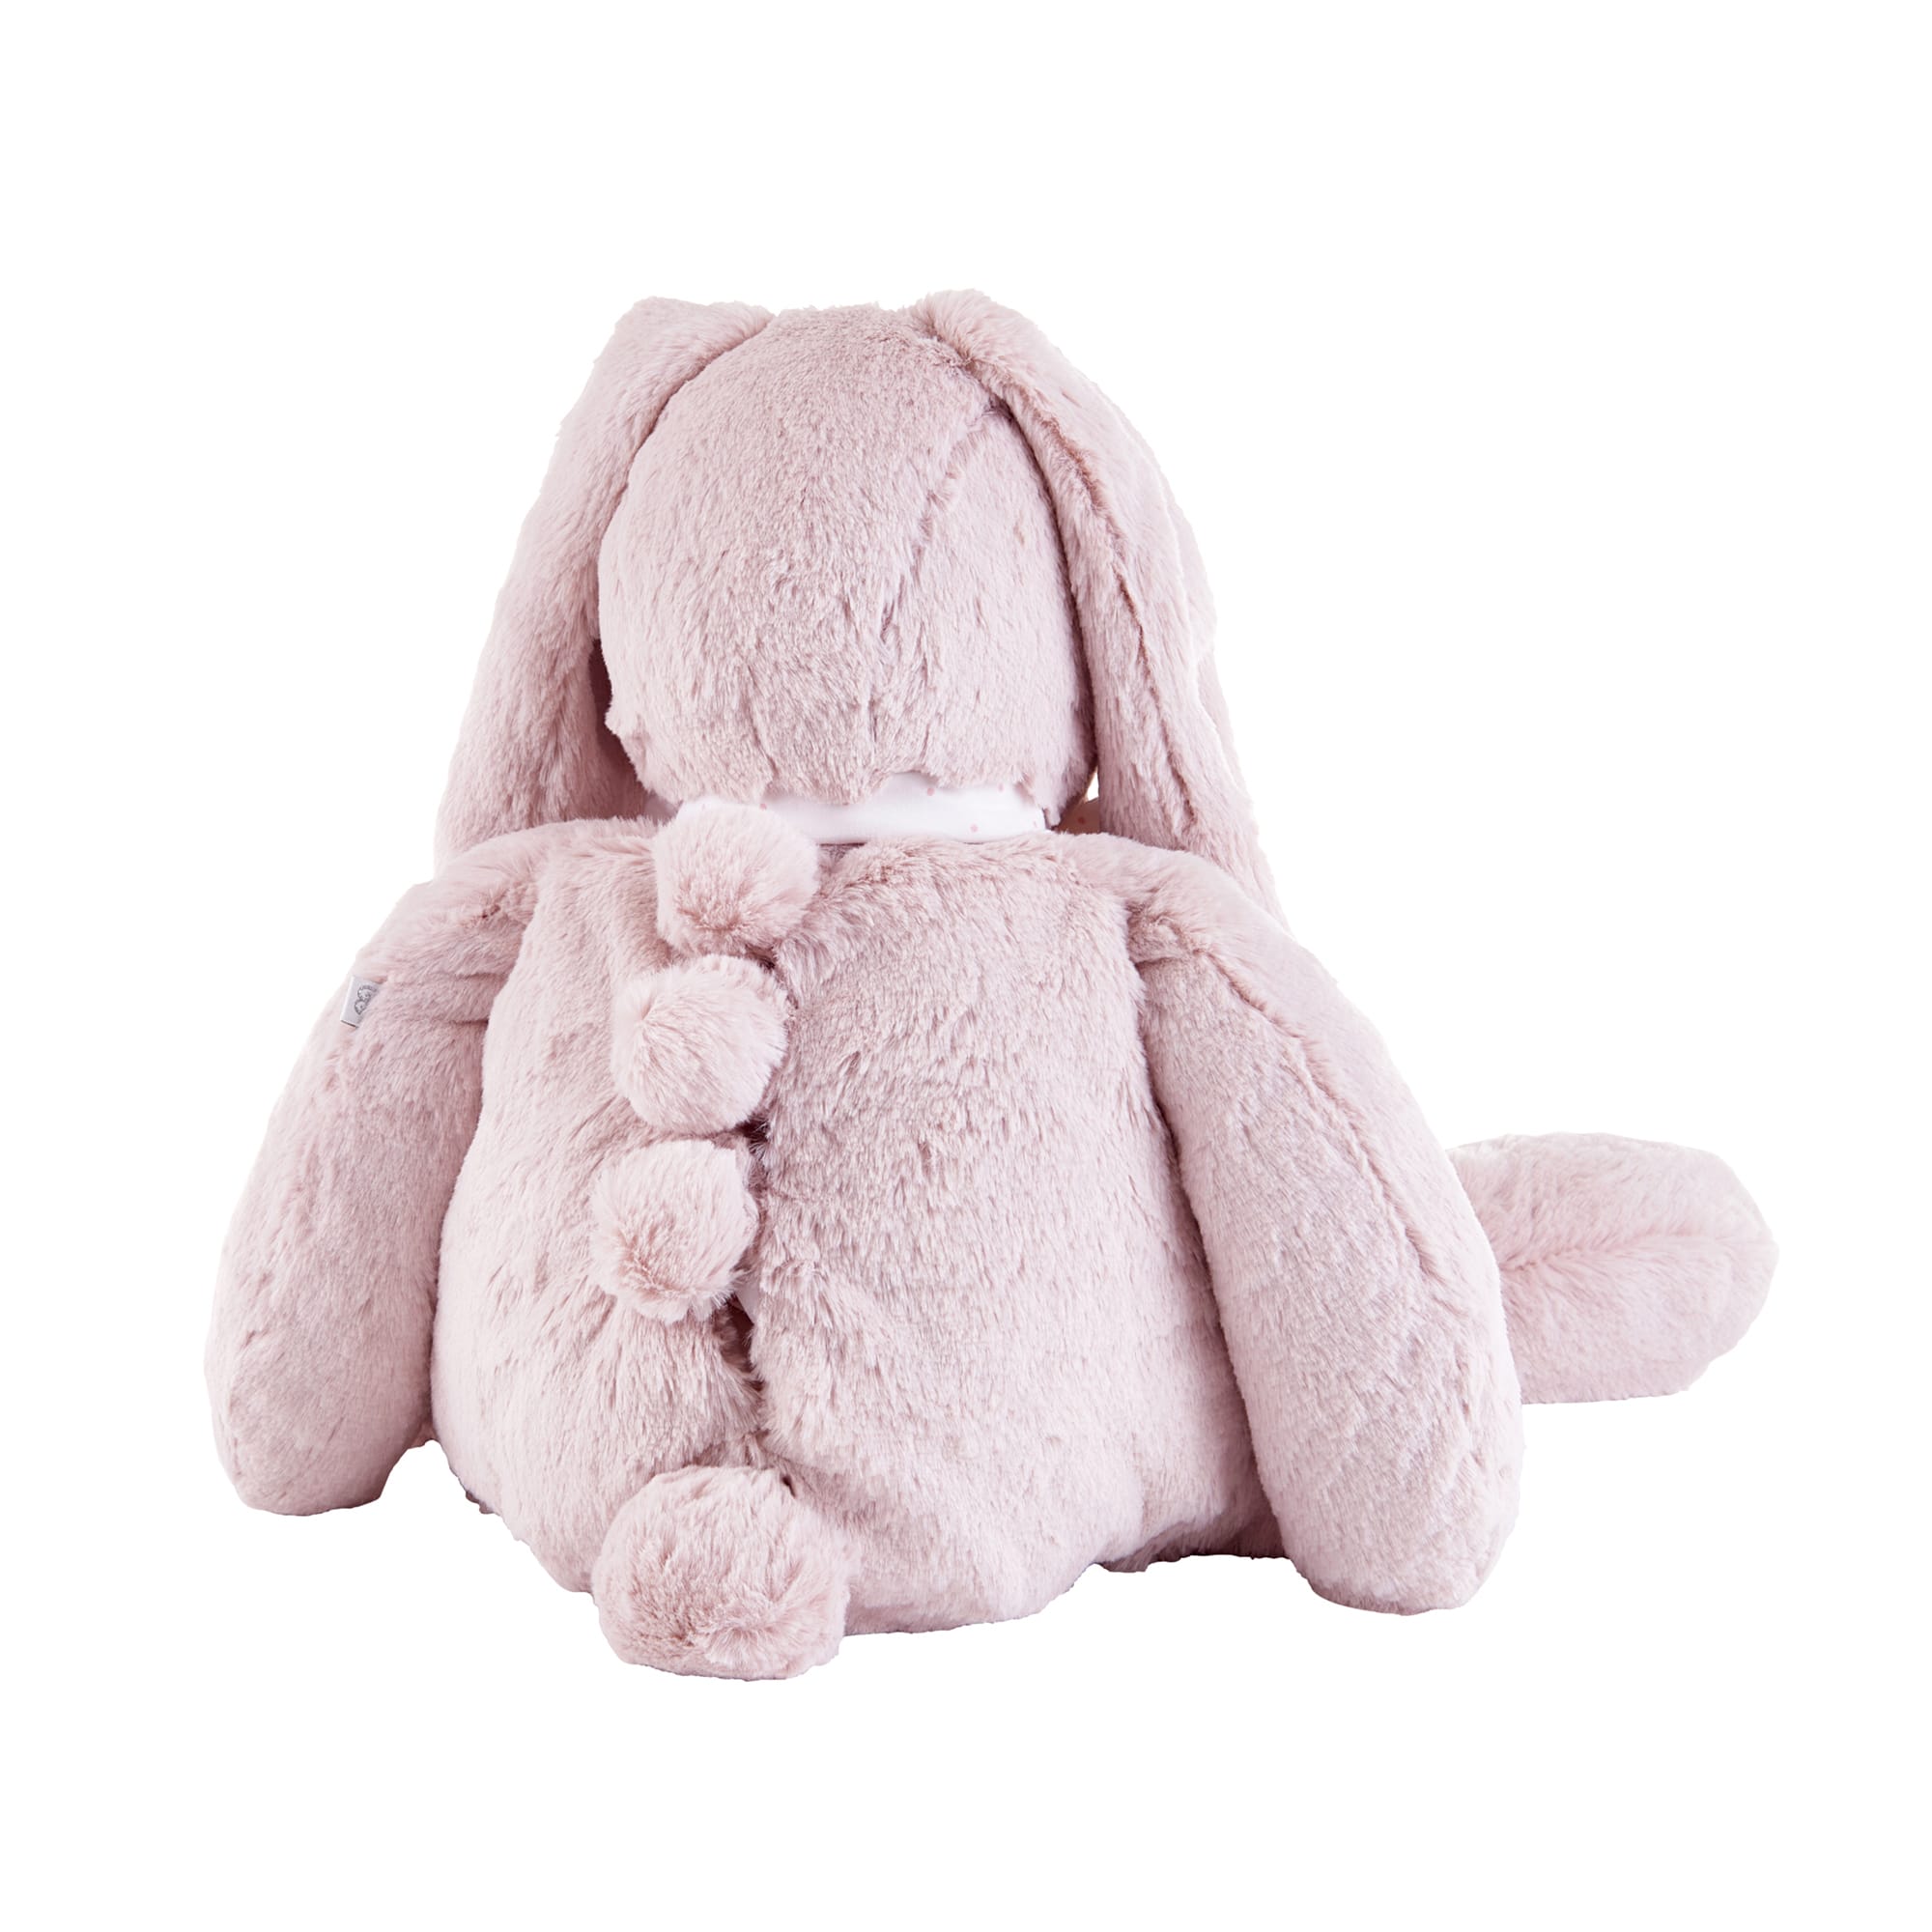 Theophile & Patachou Pyjamas Bag Rabbit - Sweet Pink